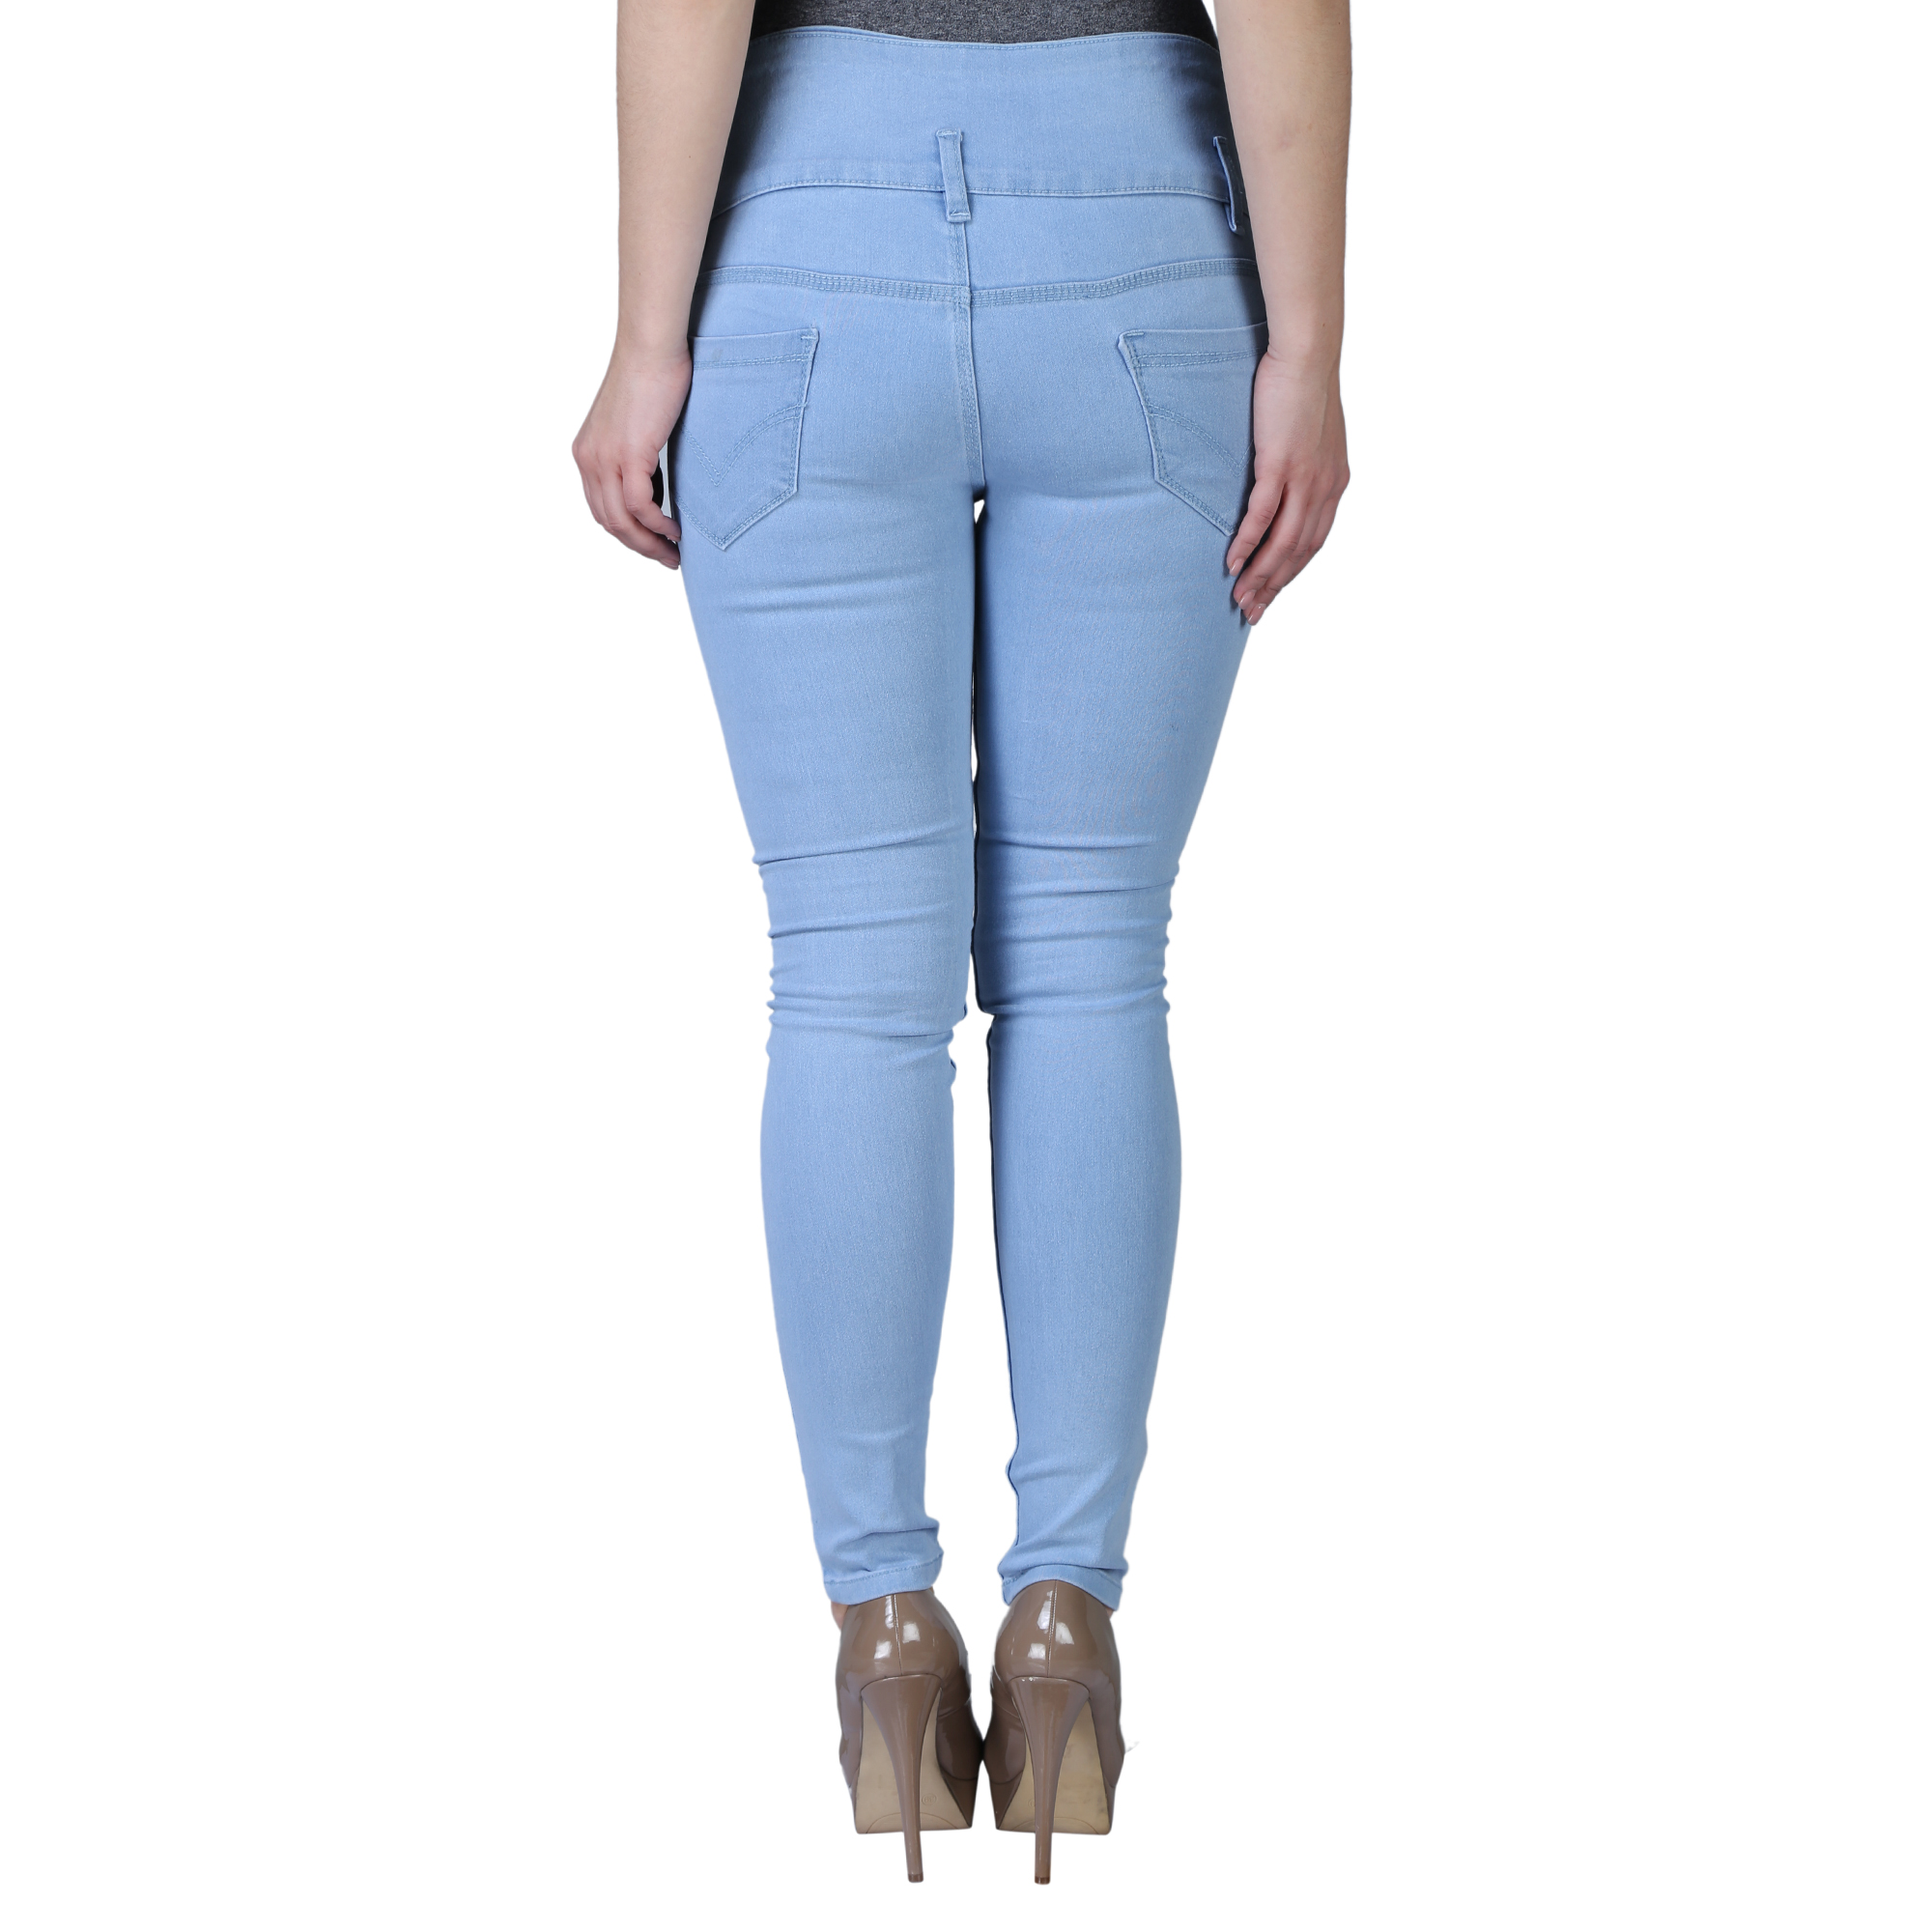 Buy Hootry Women's Slim Fit Light Blue Jeans Online @ ₹699 from ShopClues